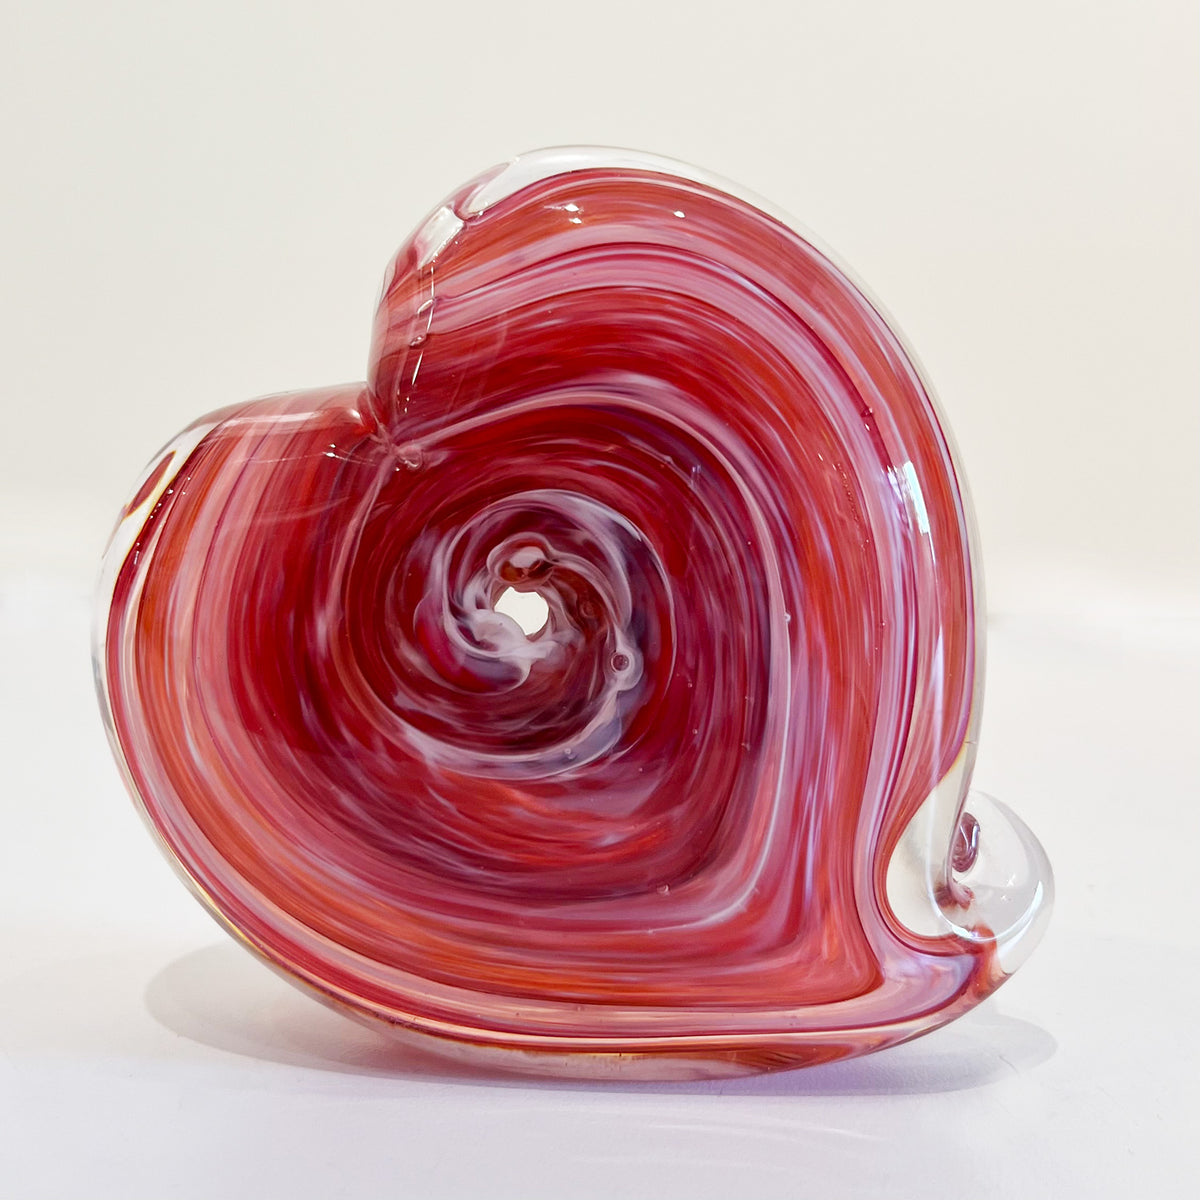 Taygan Appleton - Pink Swirl Heart, 3" x 3.5" x 1.5"